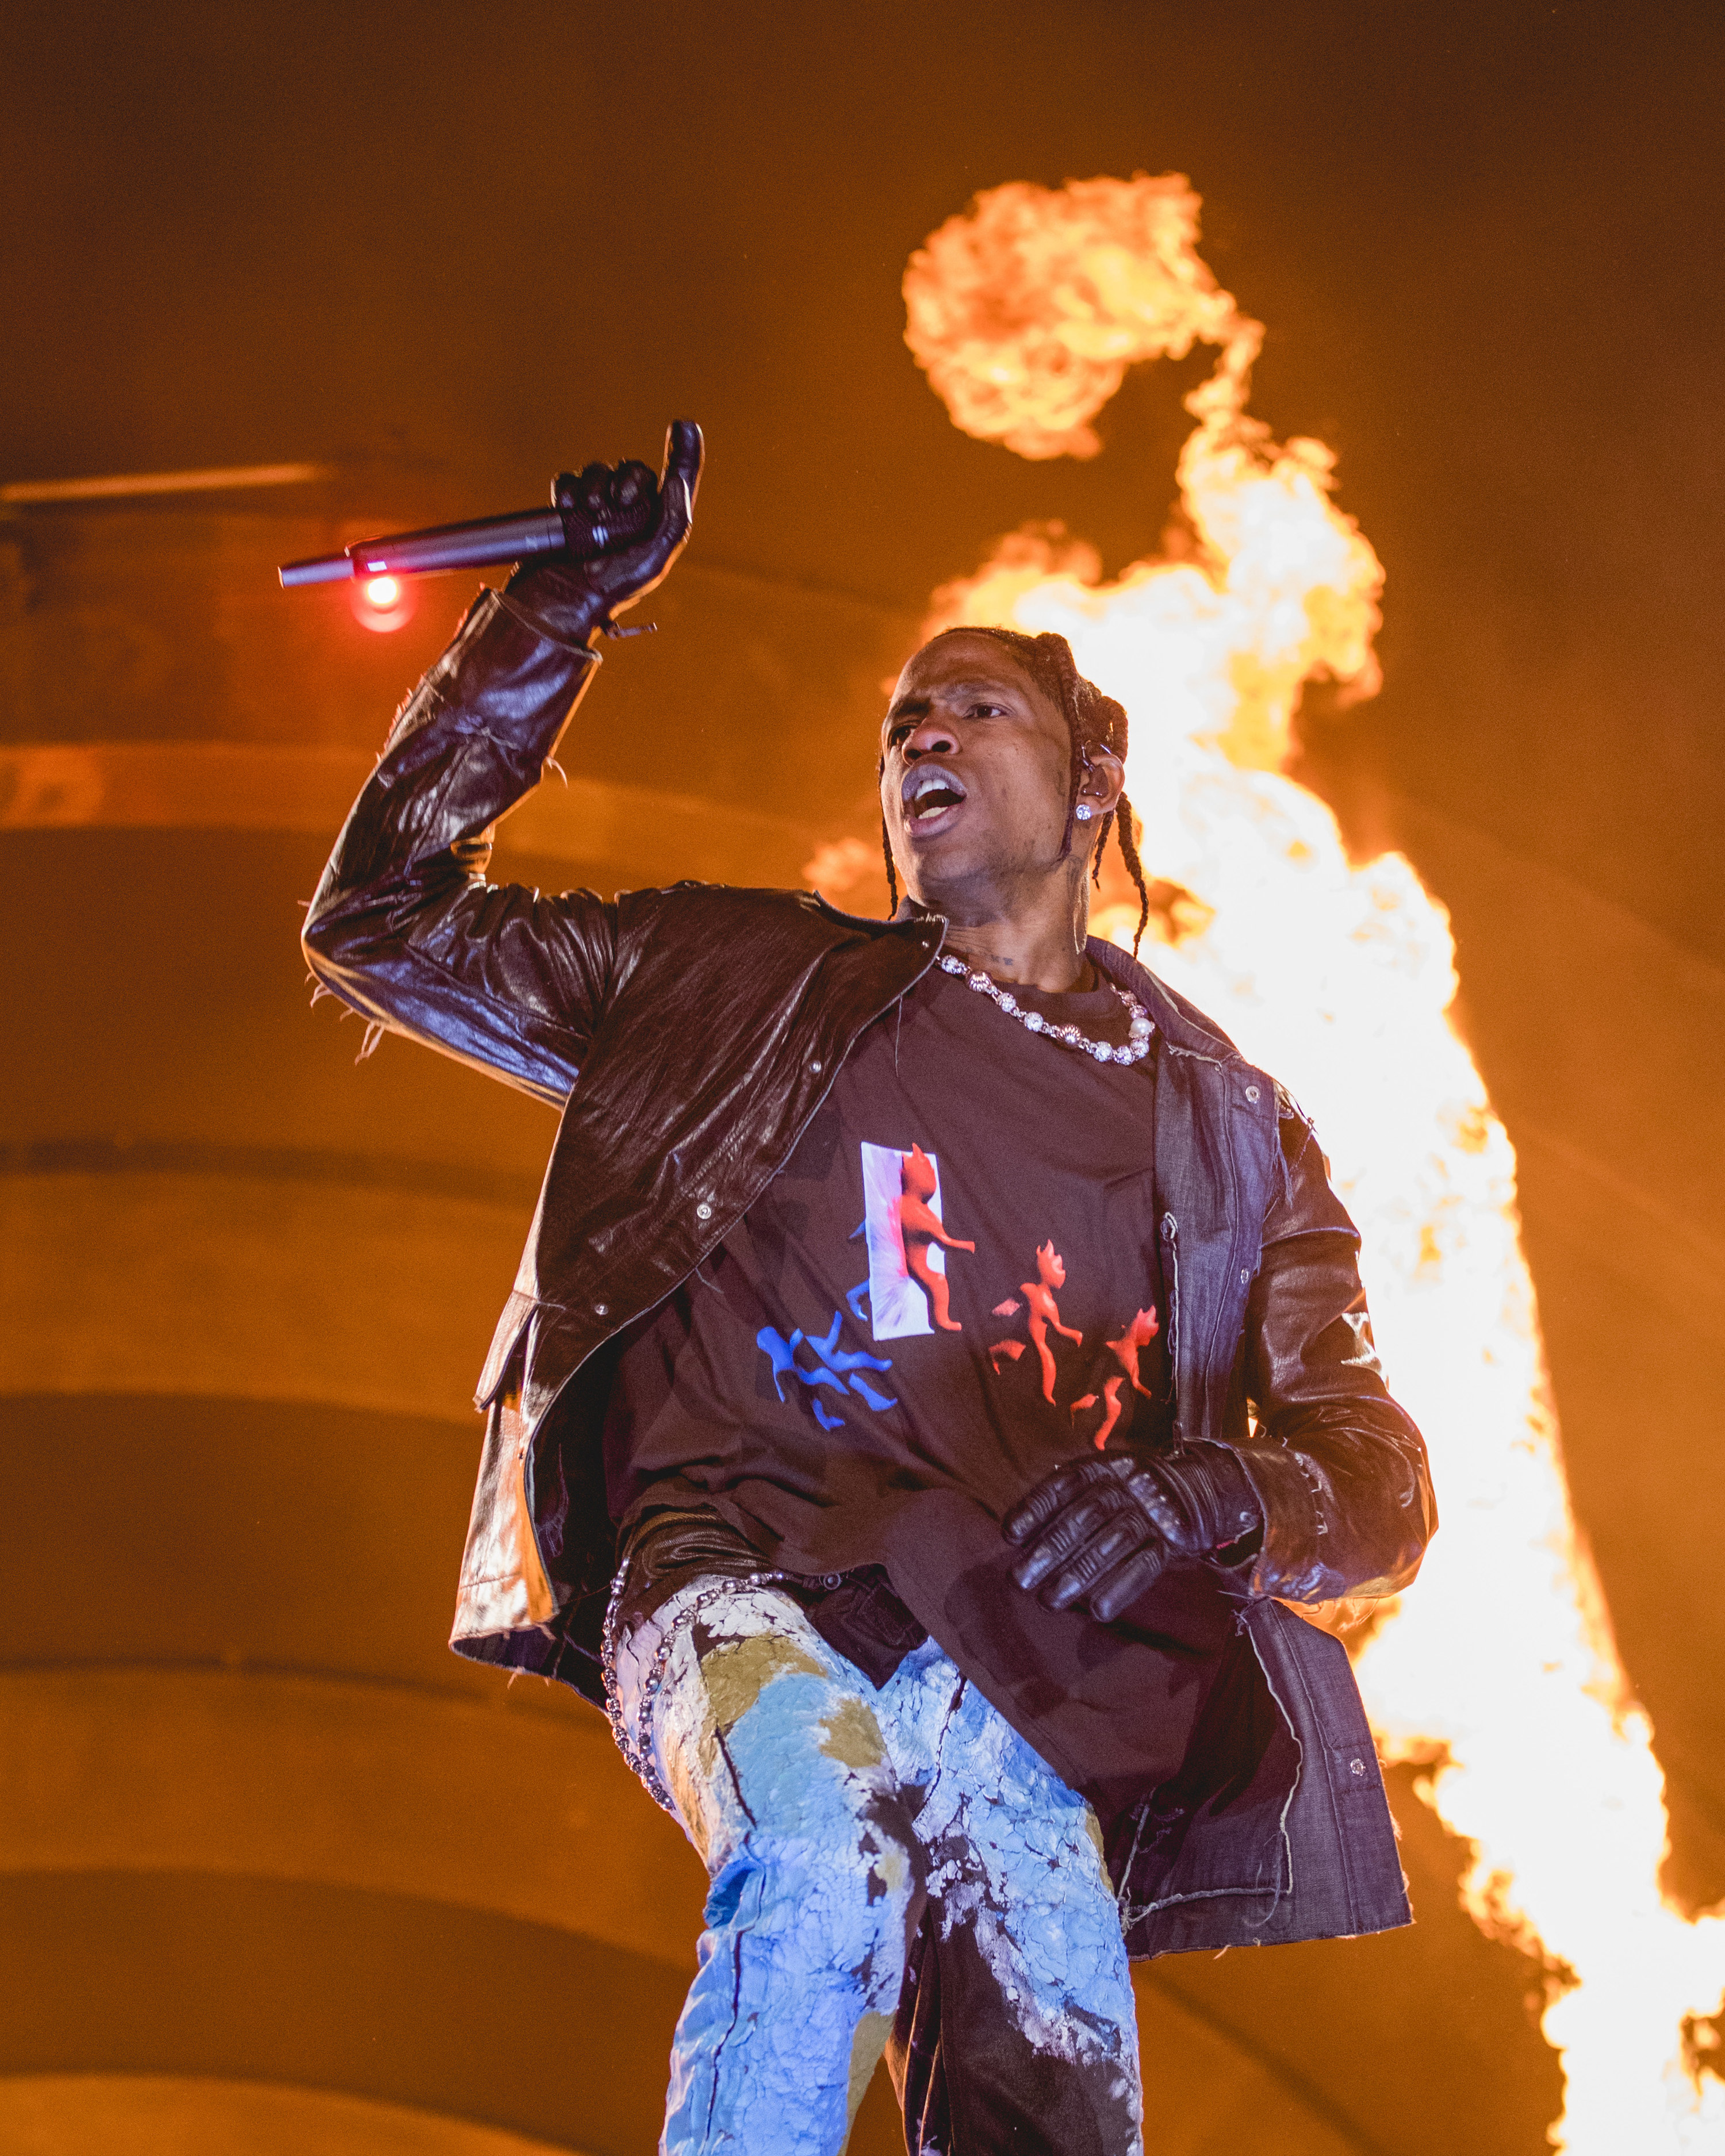 Kylie onstage with flames behind him